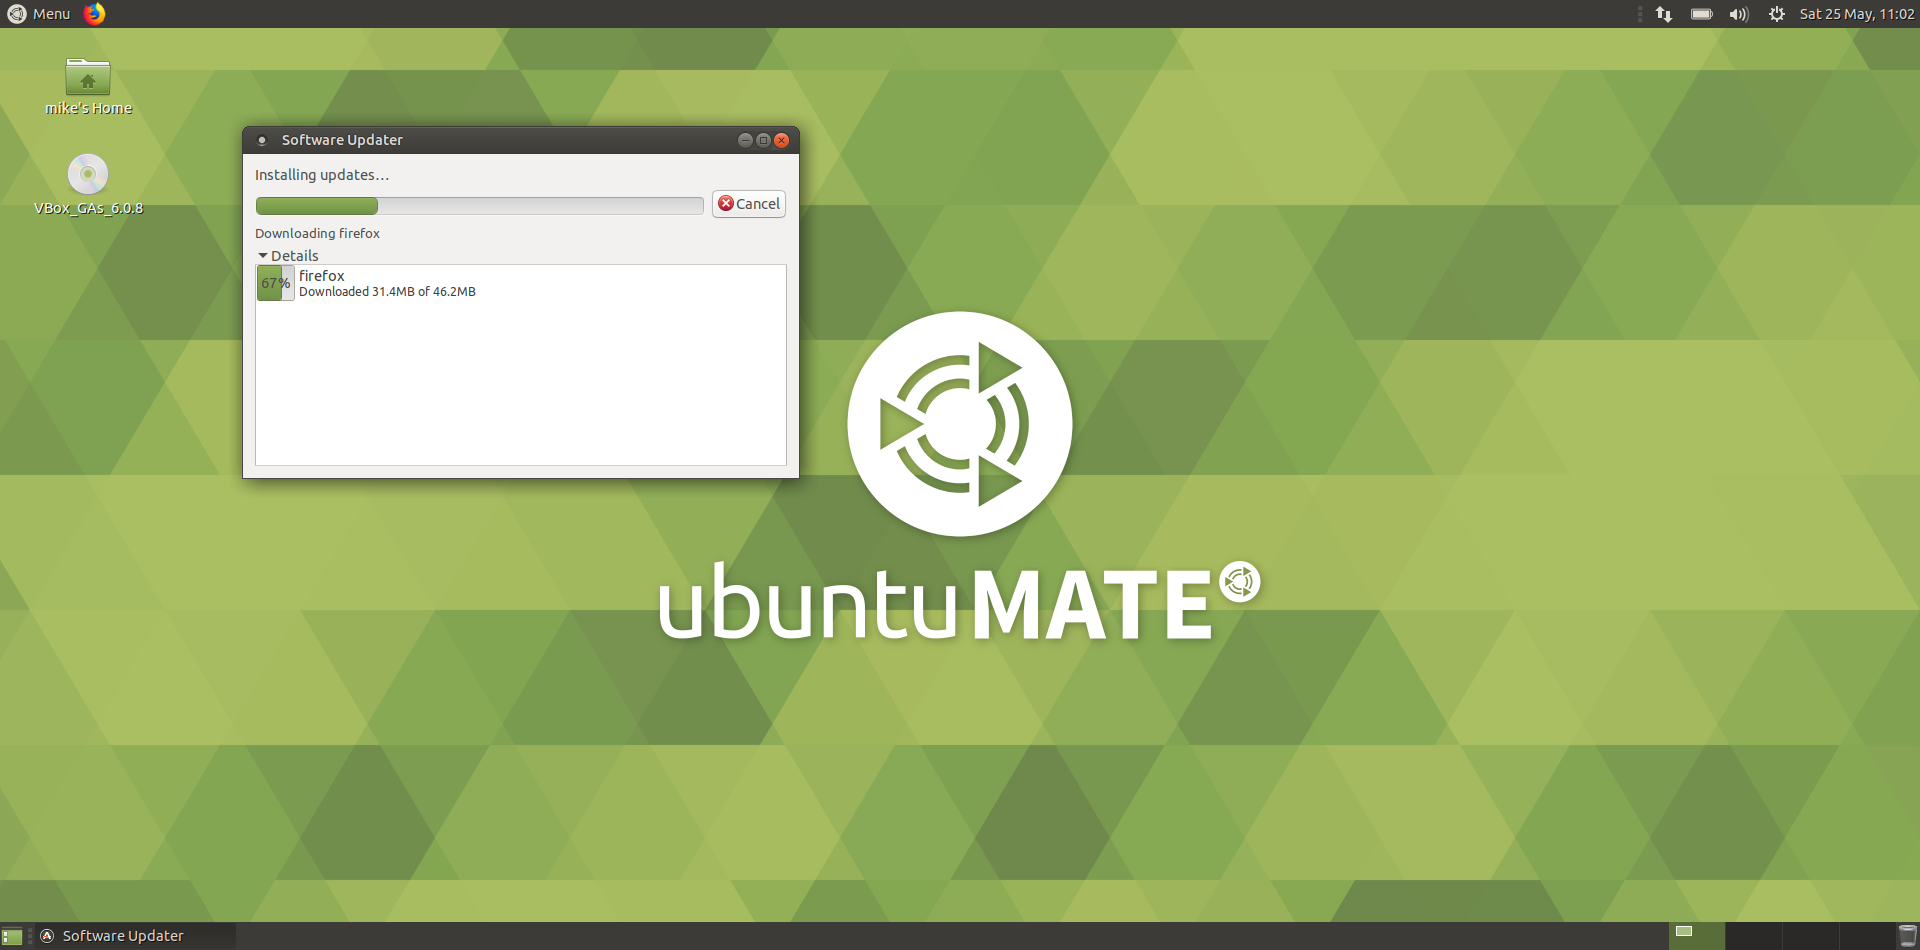 ubuntu mate - 2 - software updater